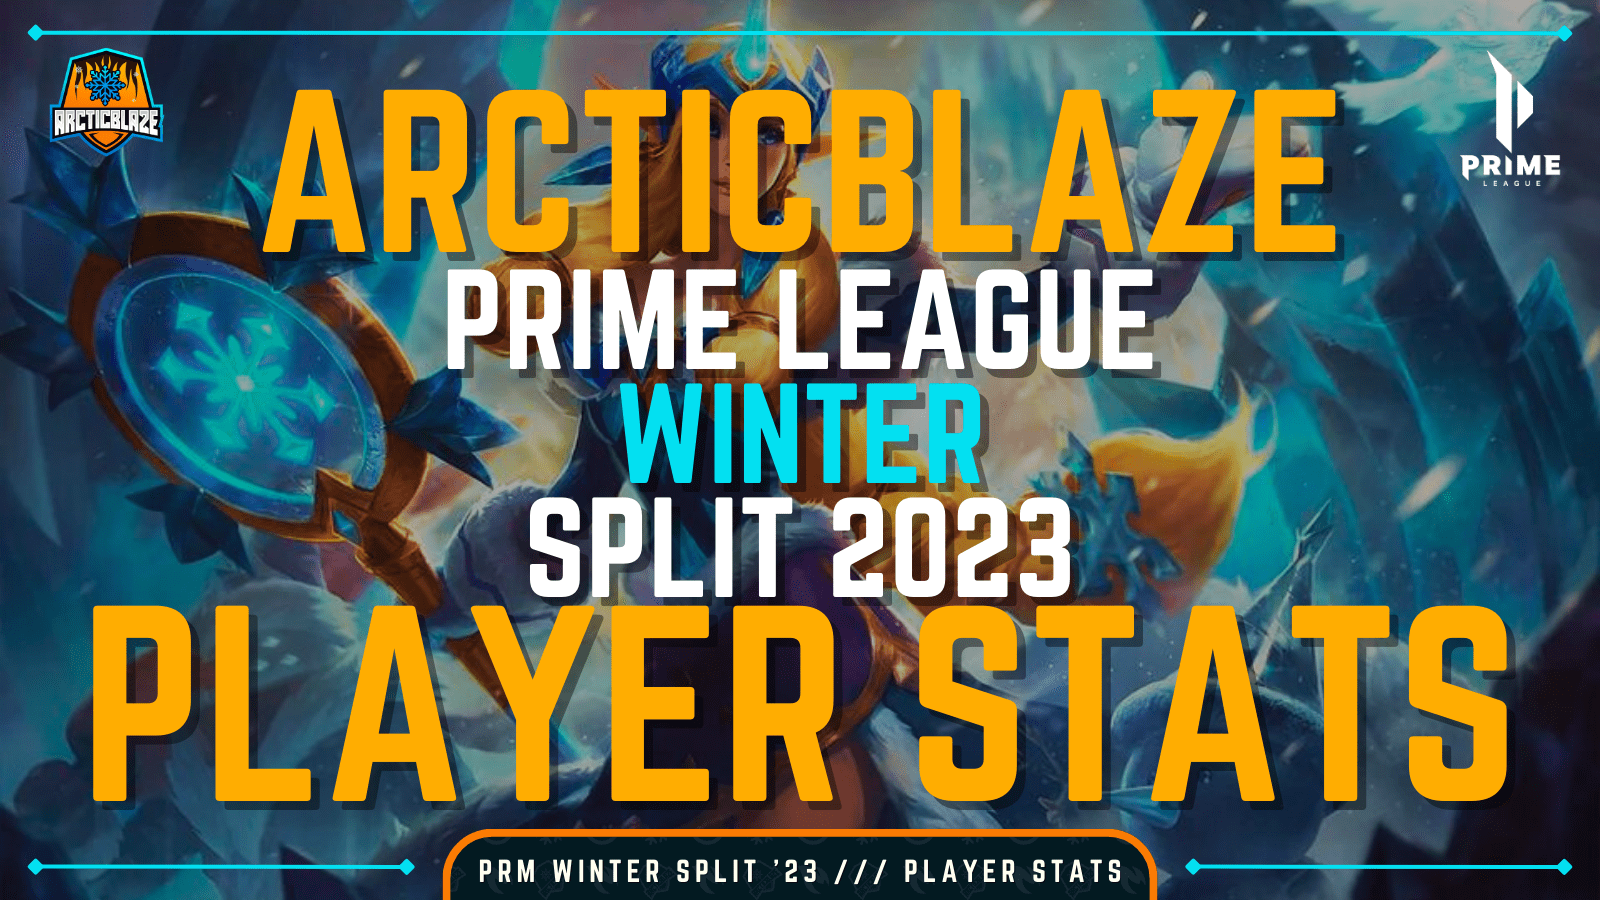 PRM Winter 2023 Player Stats - ArcticBlaze.net